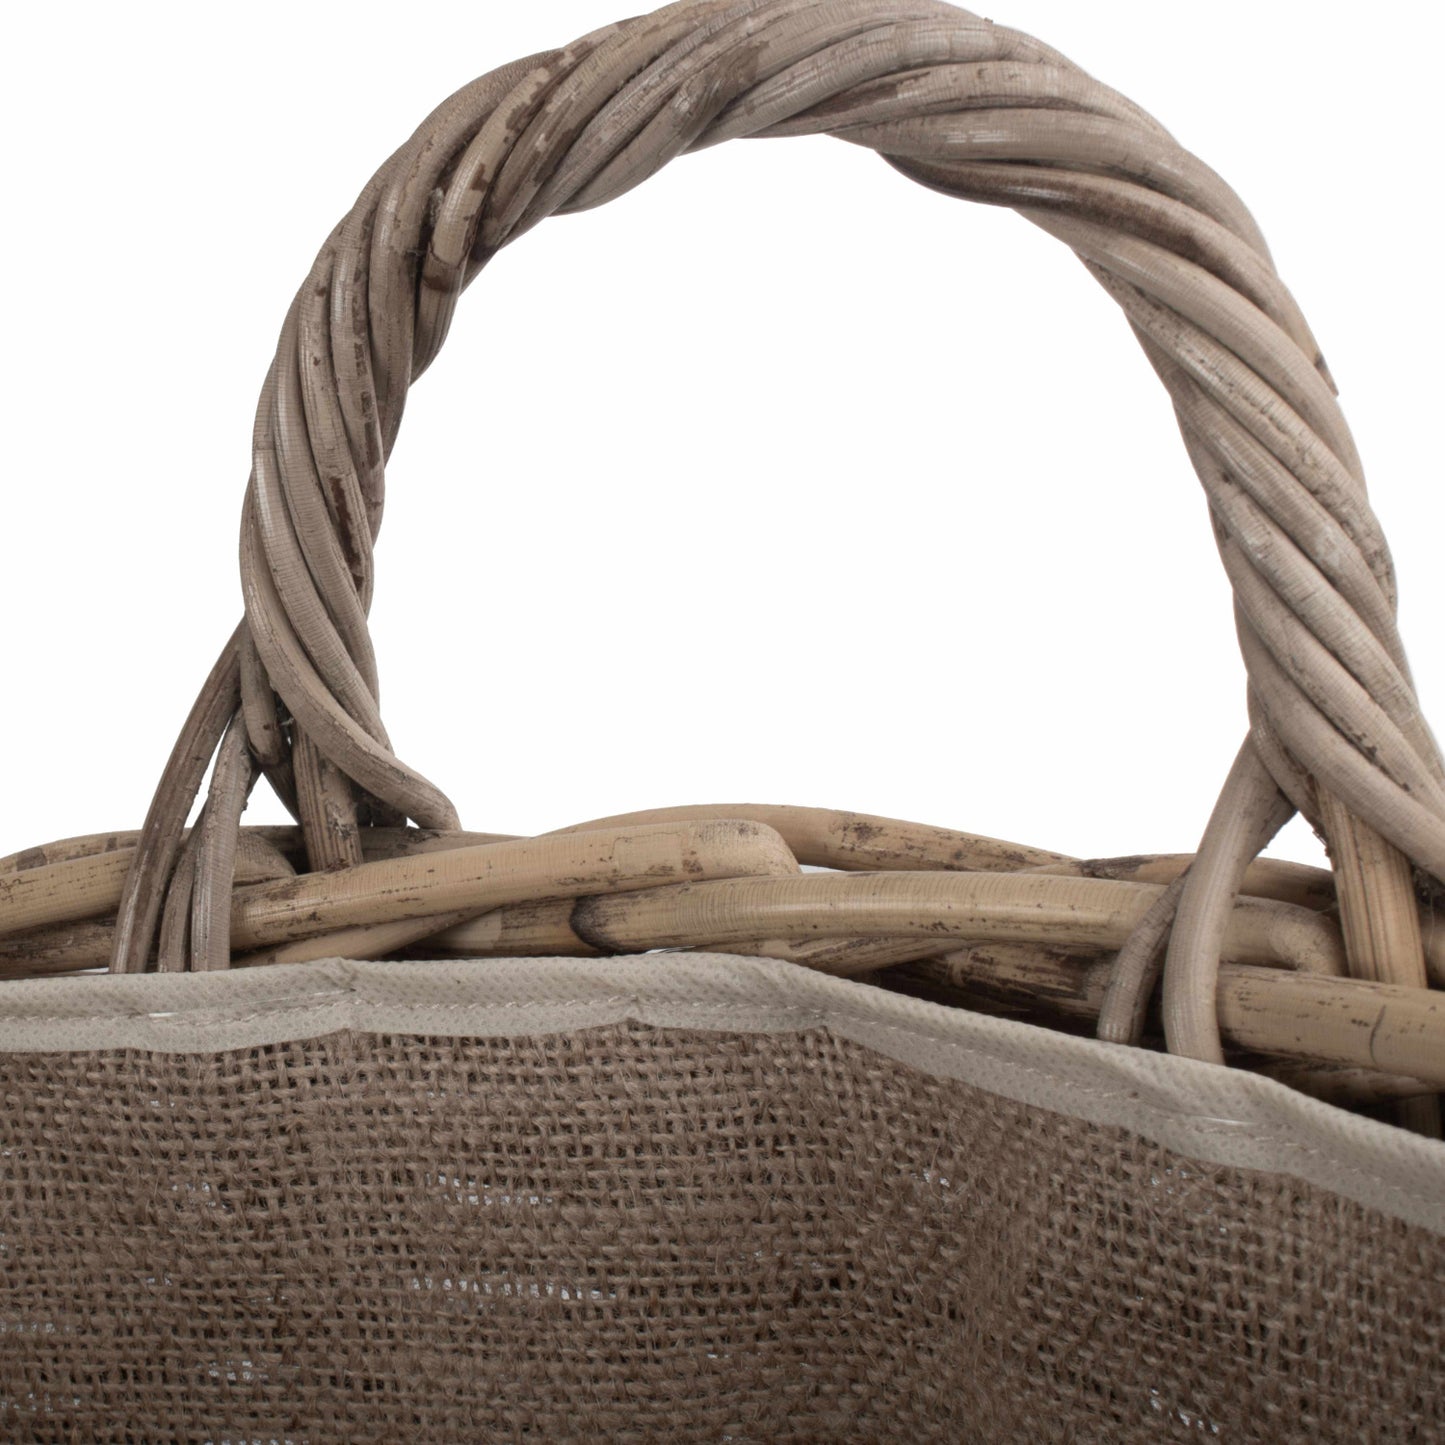 Pot-bellied Cordura Lined Rattan Log Basket